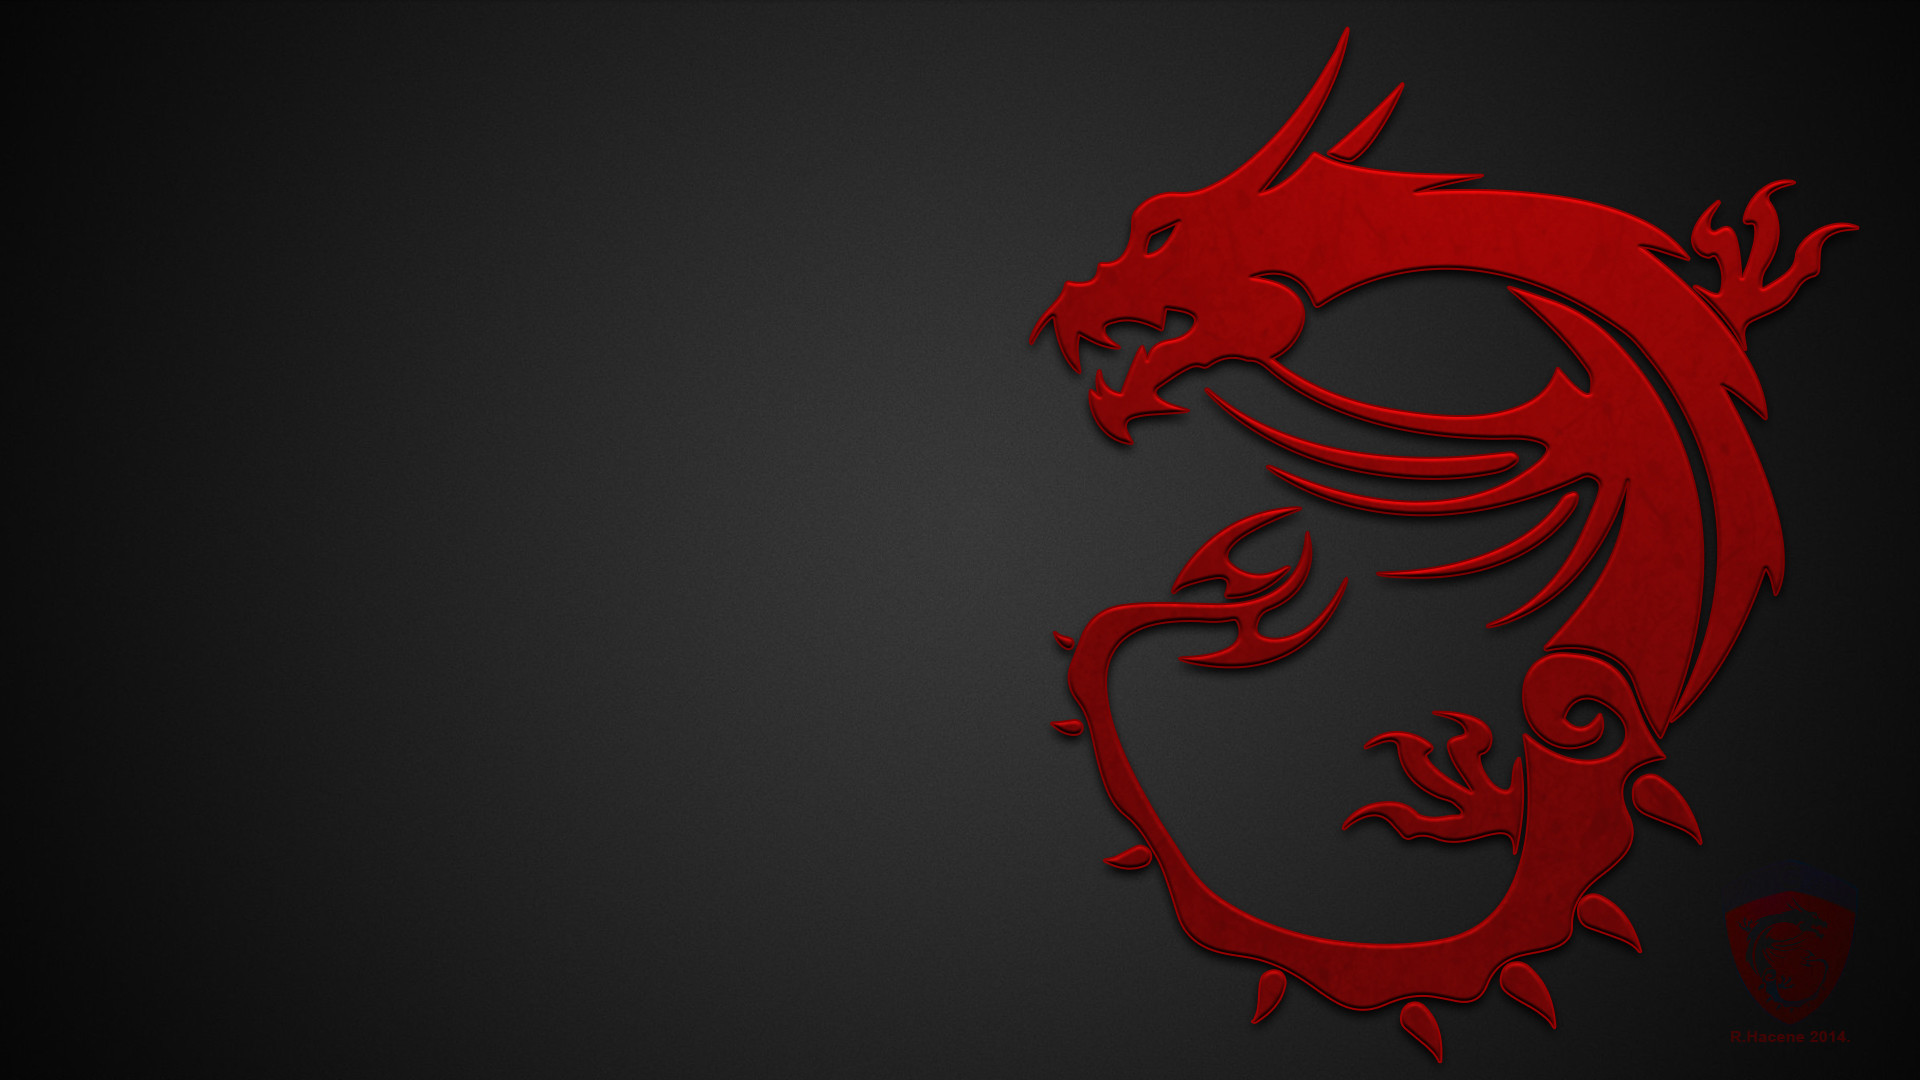 msi wallpaper 4k,red,fictional character,illustration,dragon,font